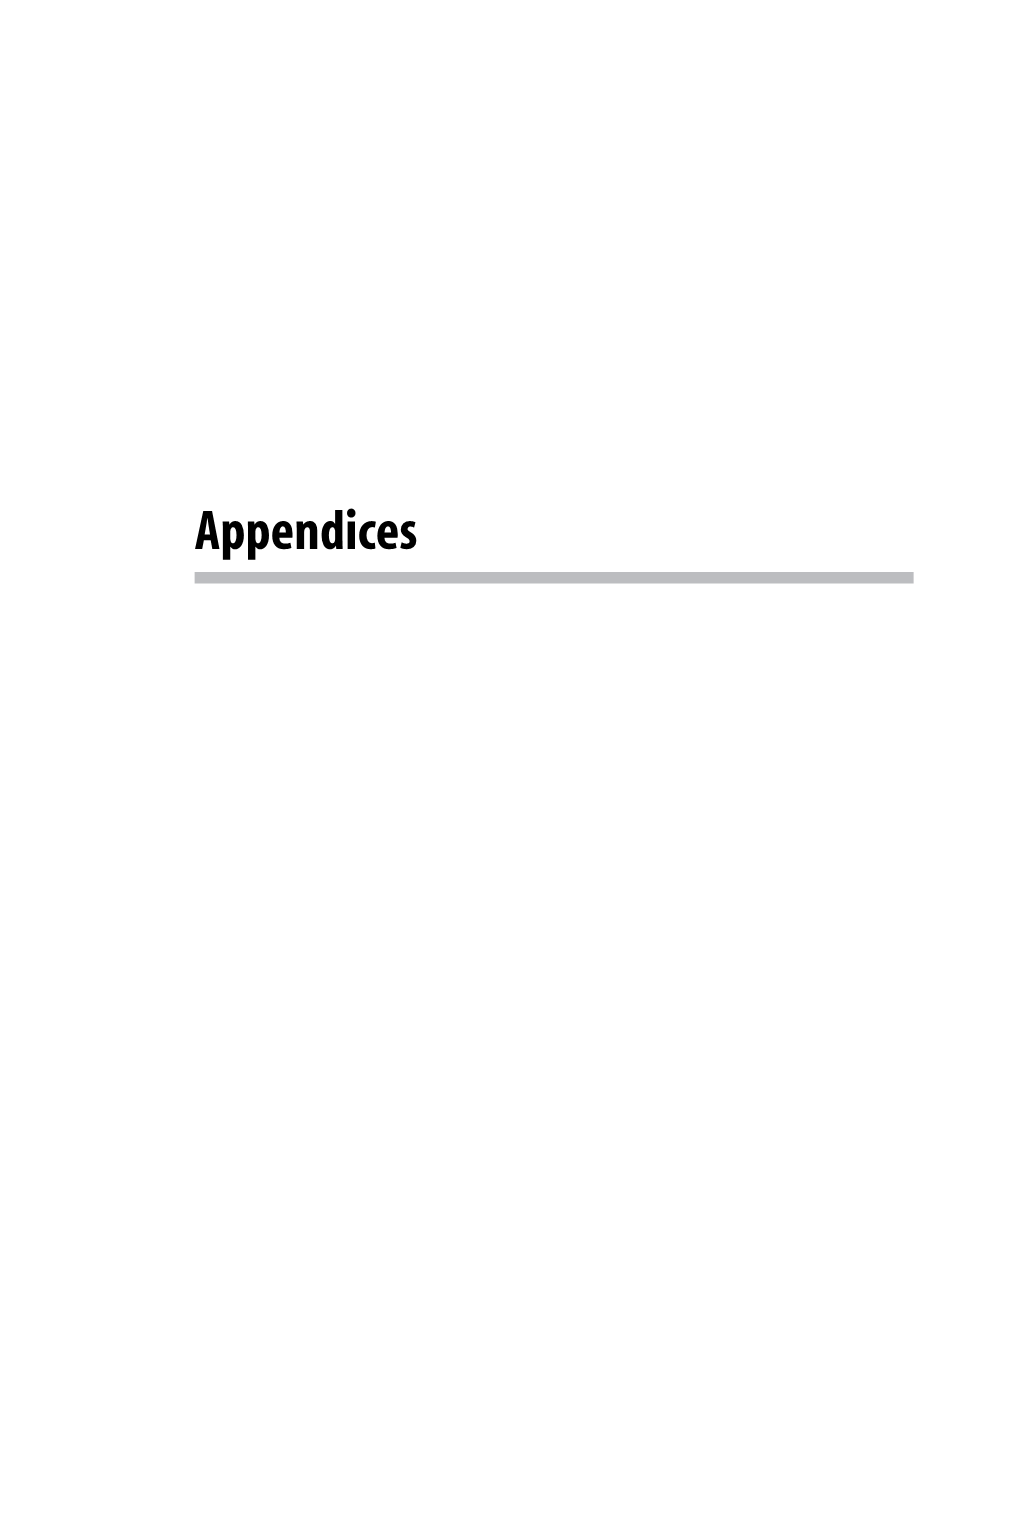 Appendices Jefferson Scale of Physician Empathya (JSPE) (HP-Version)